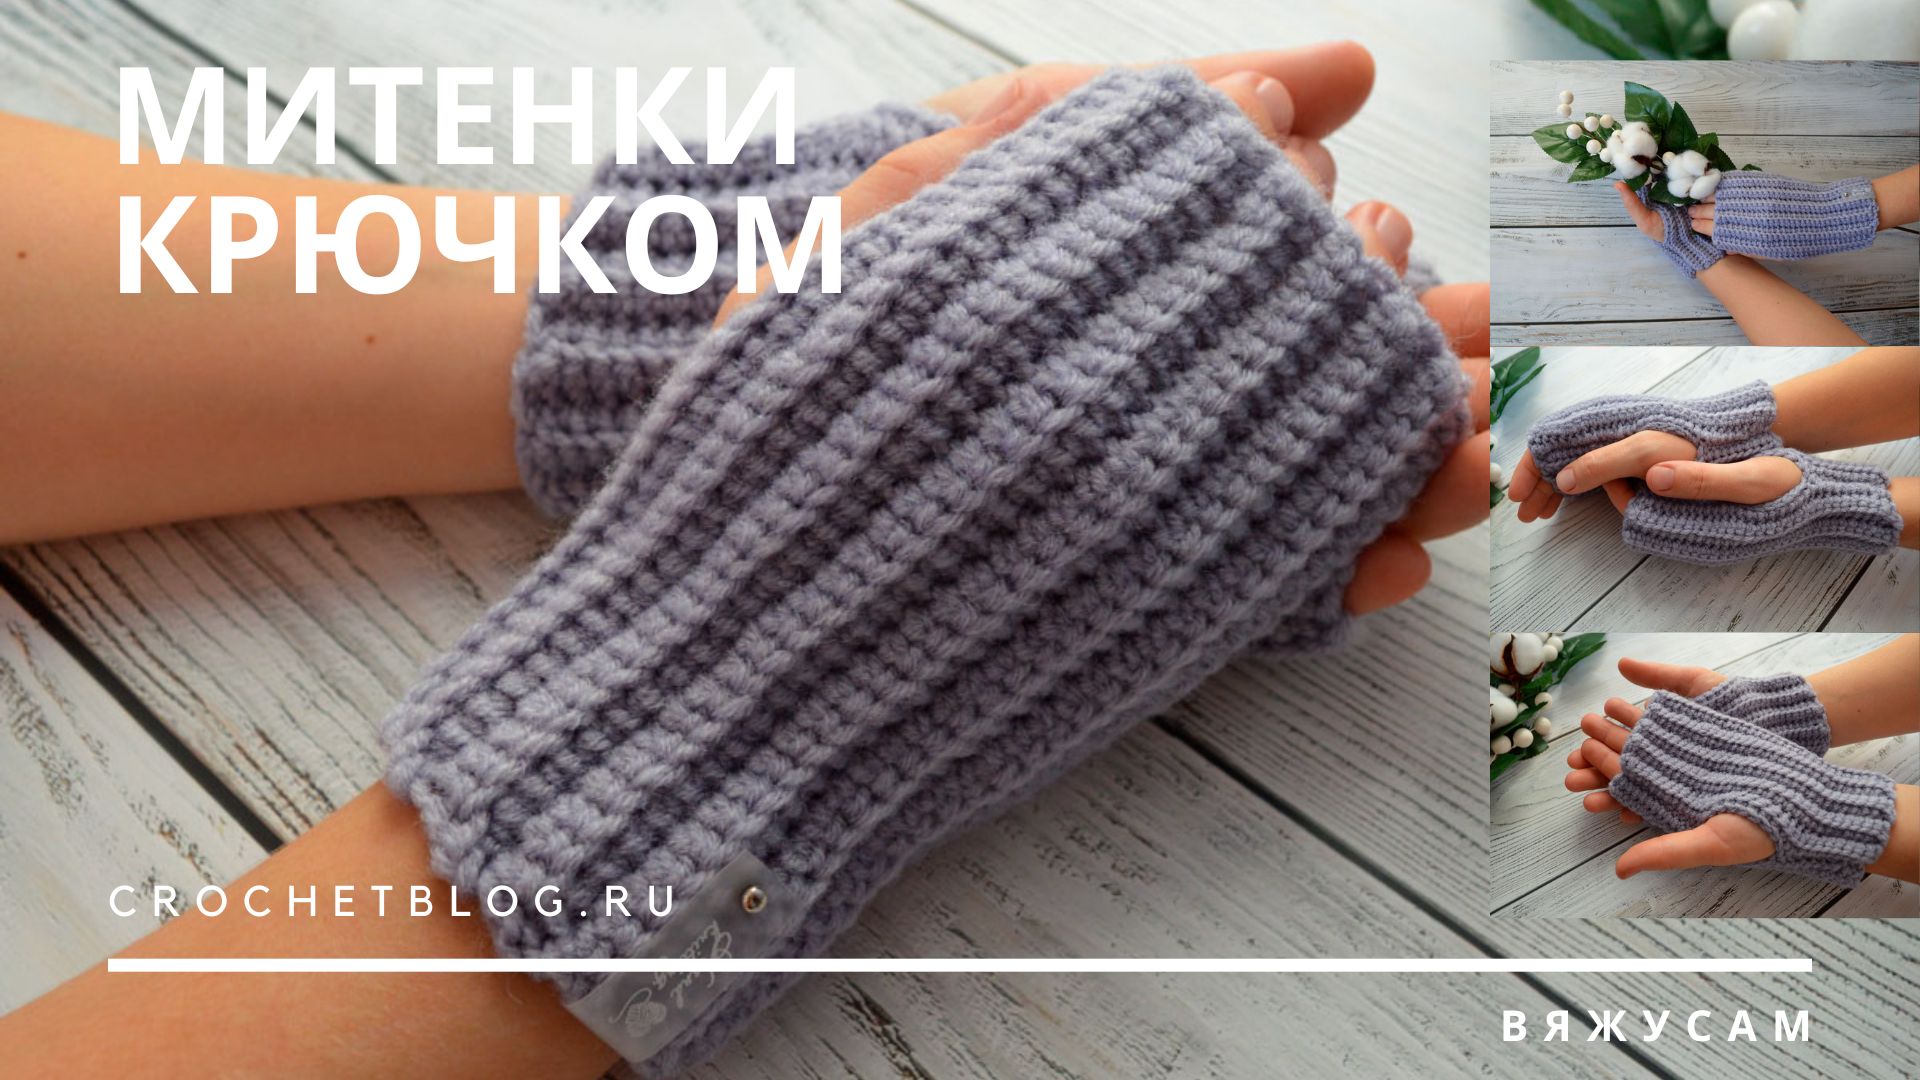 Вязание перчаток без пальцев